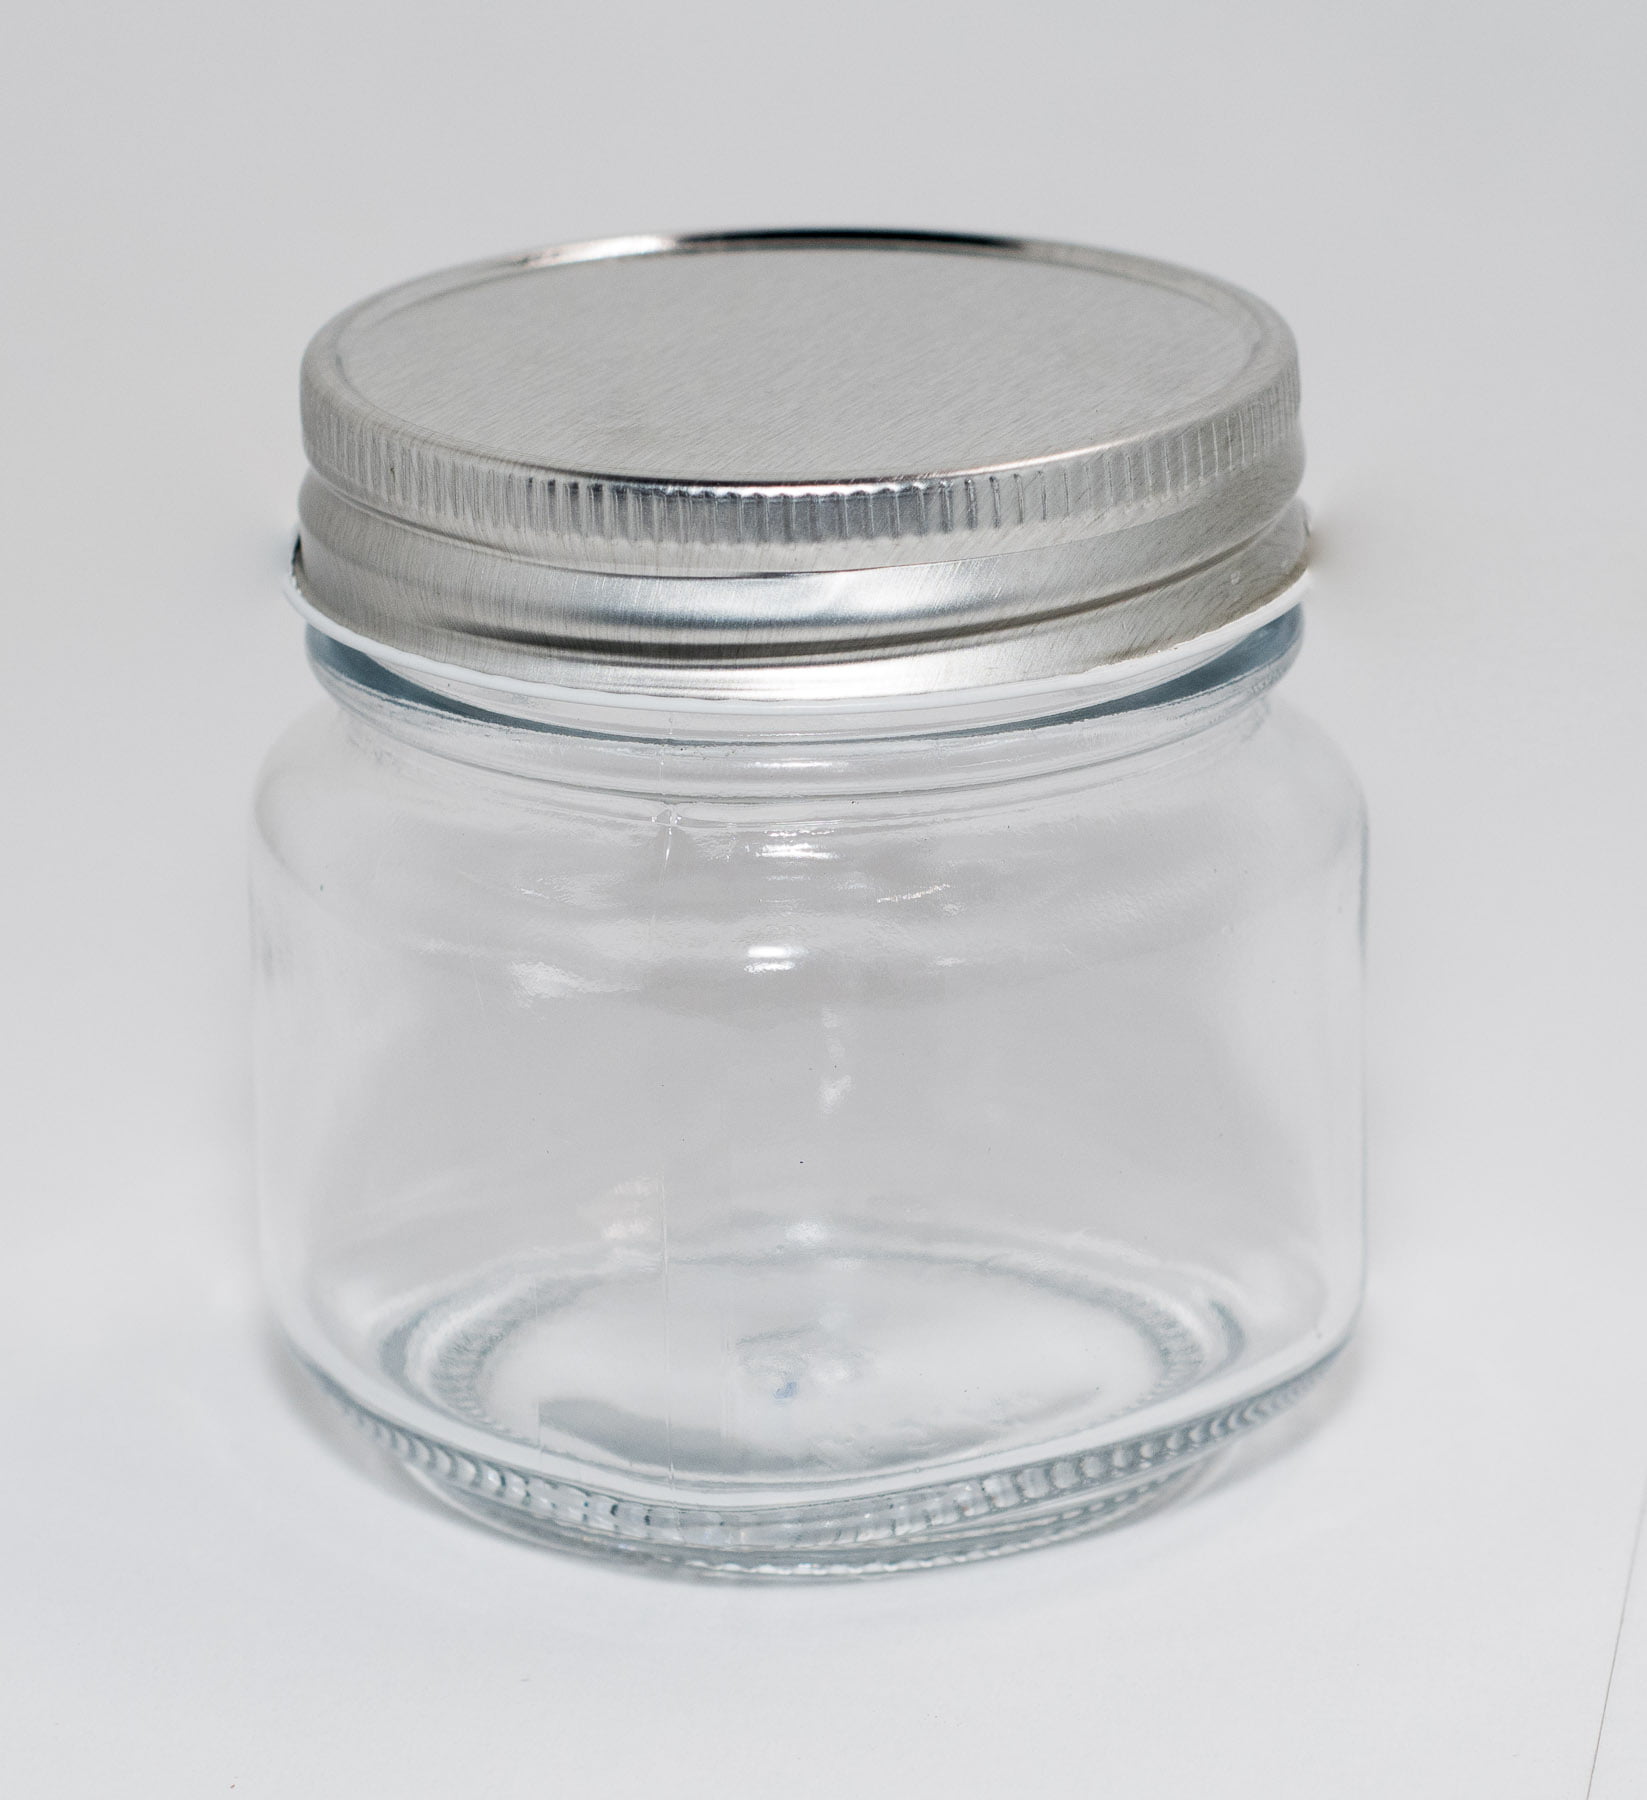 8 oz Mason Jar with Silver Lids, Case of 12 - Walmart.com - Walmart.com